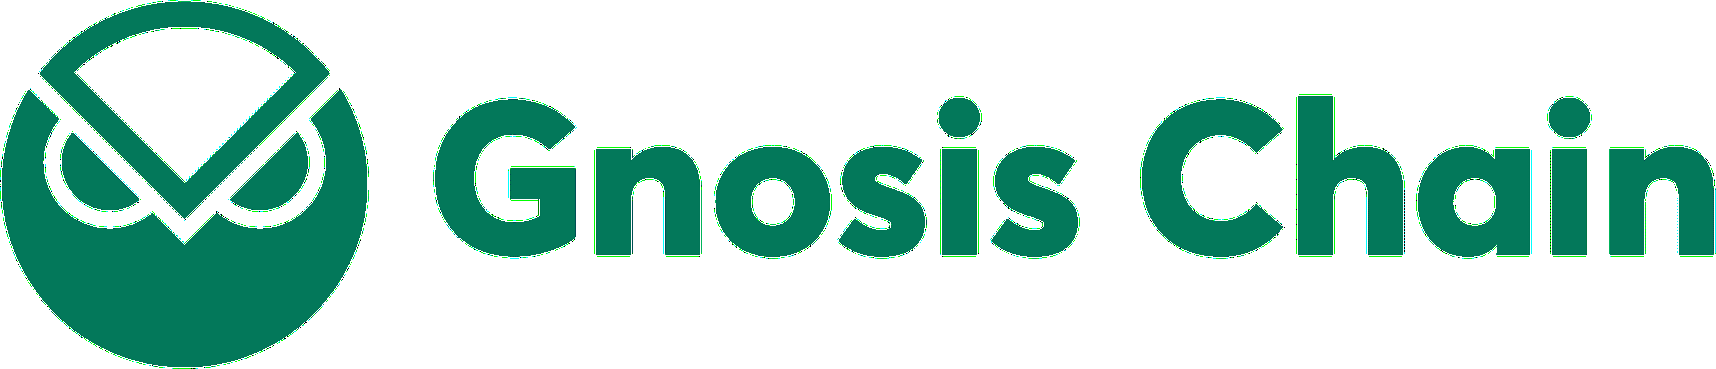 Le logo de la Gnosis Chain